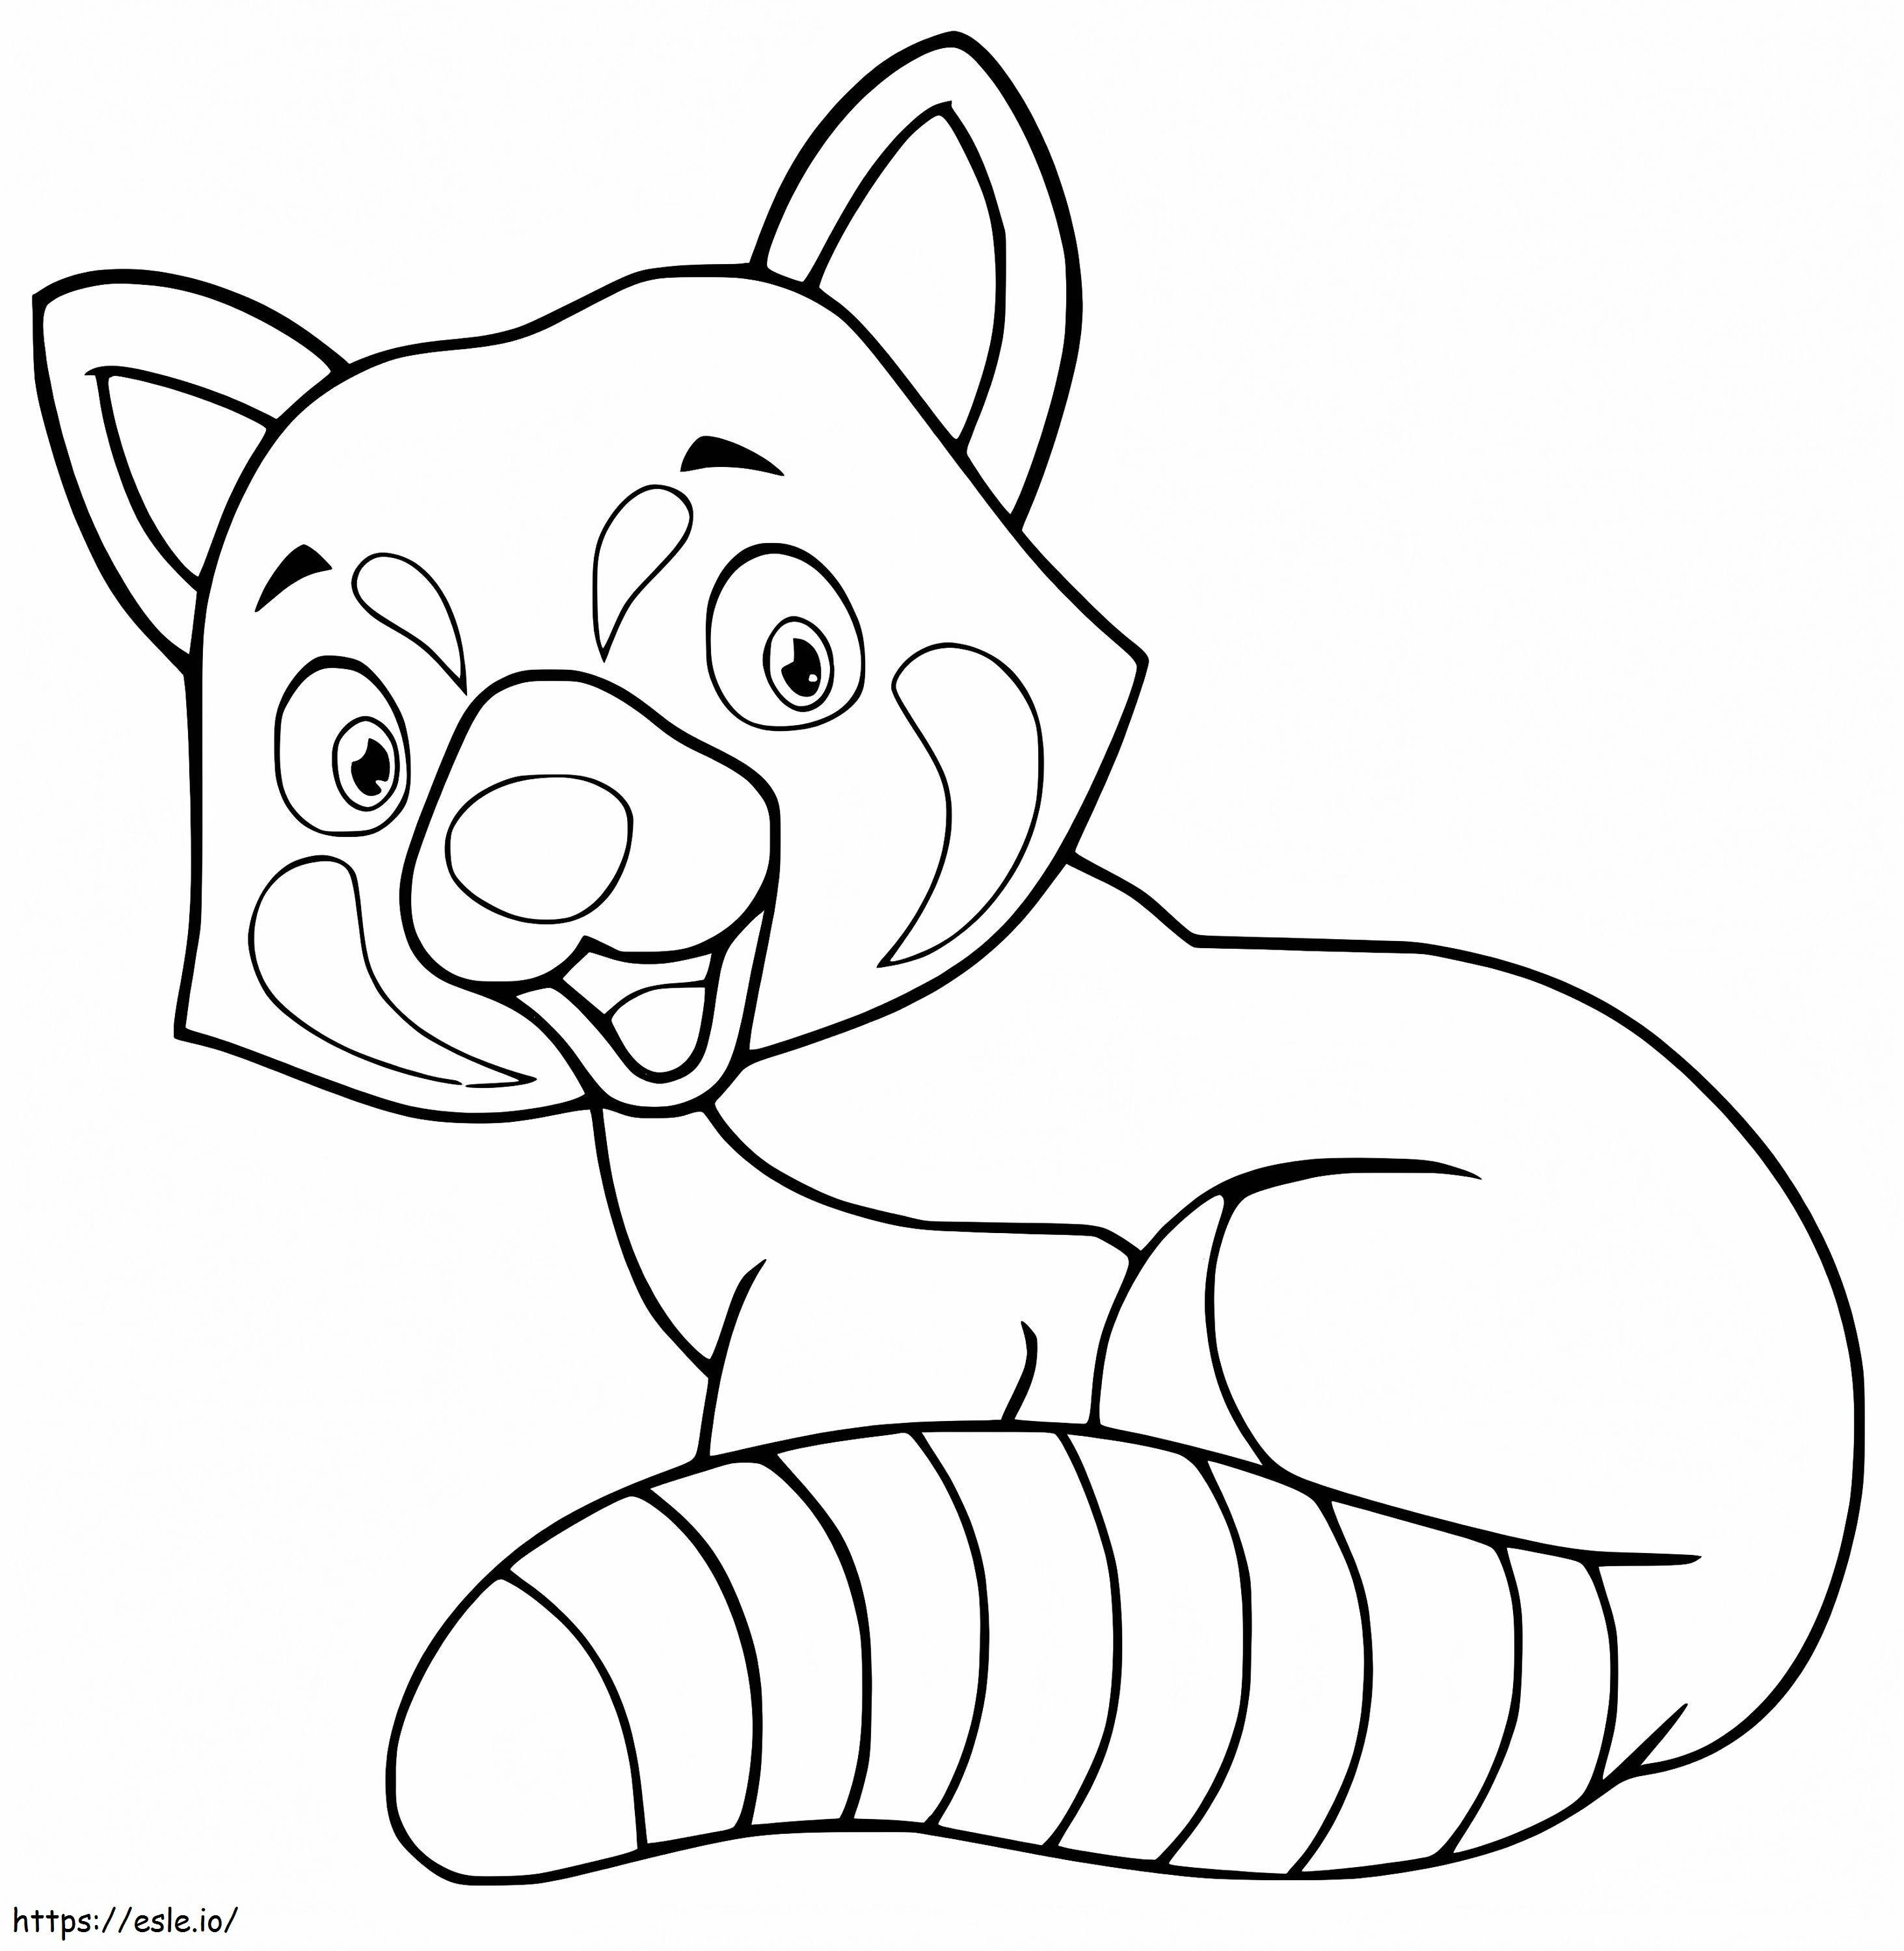 Cartoon Red Panda coloring page